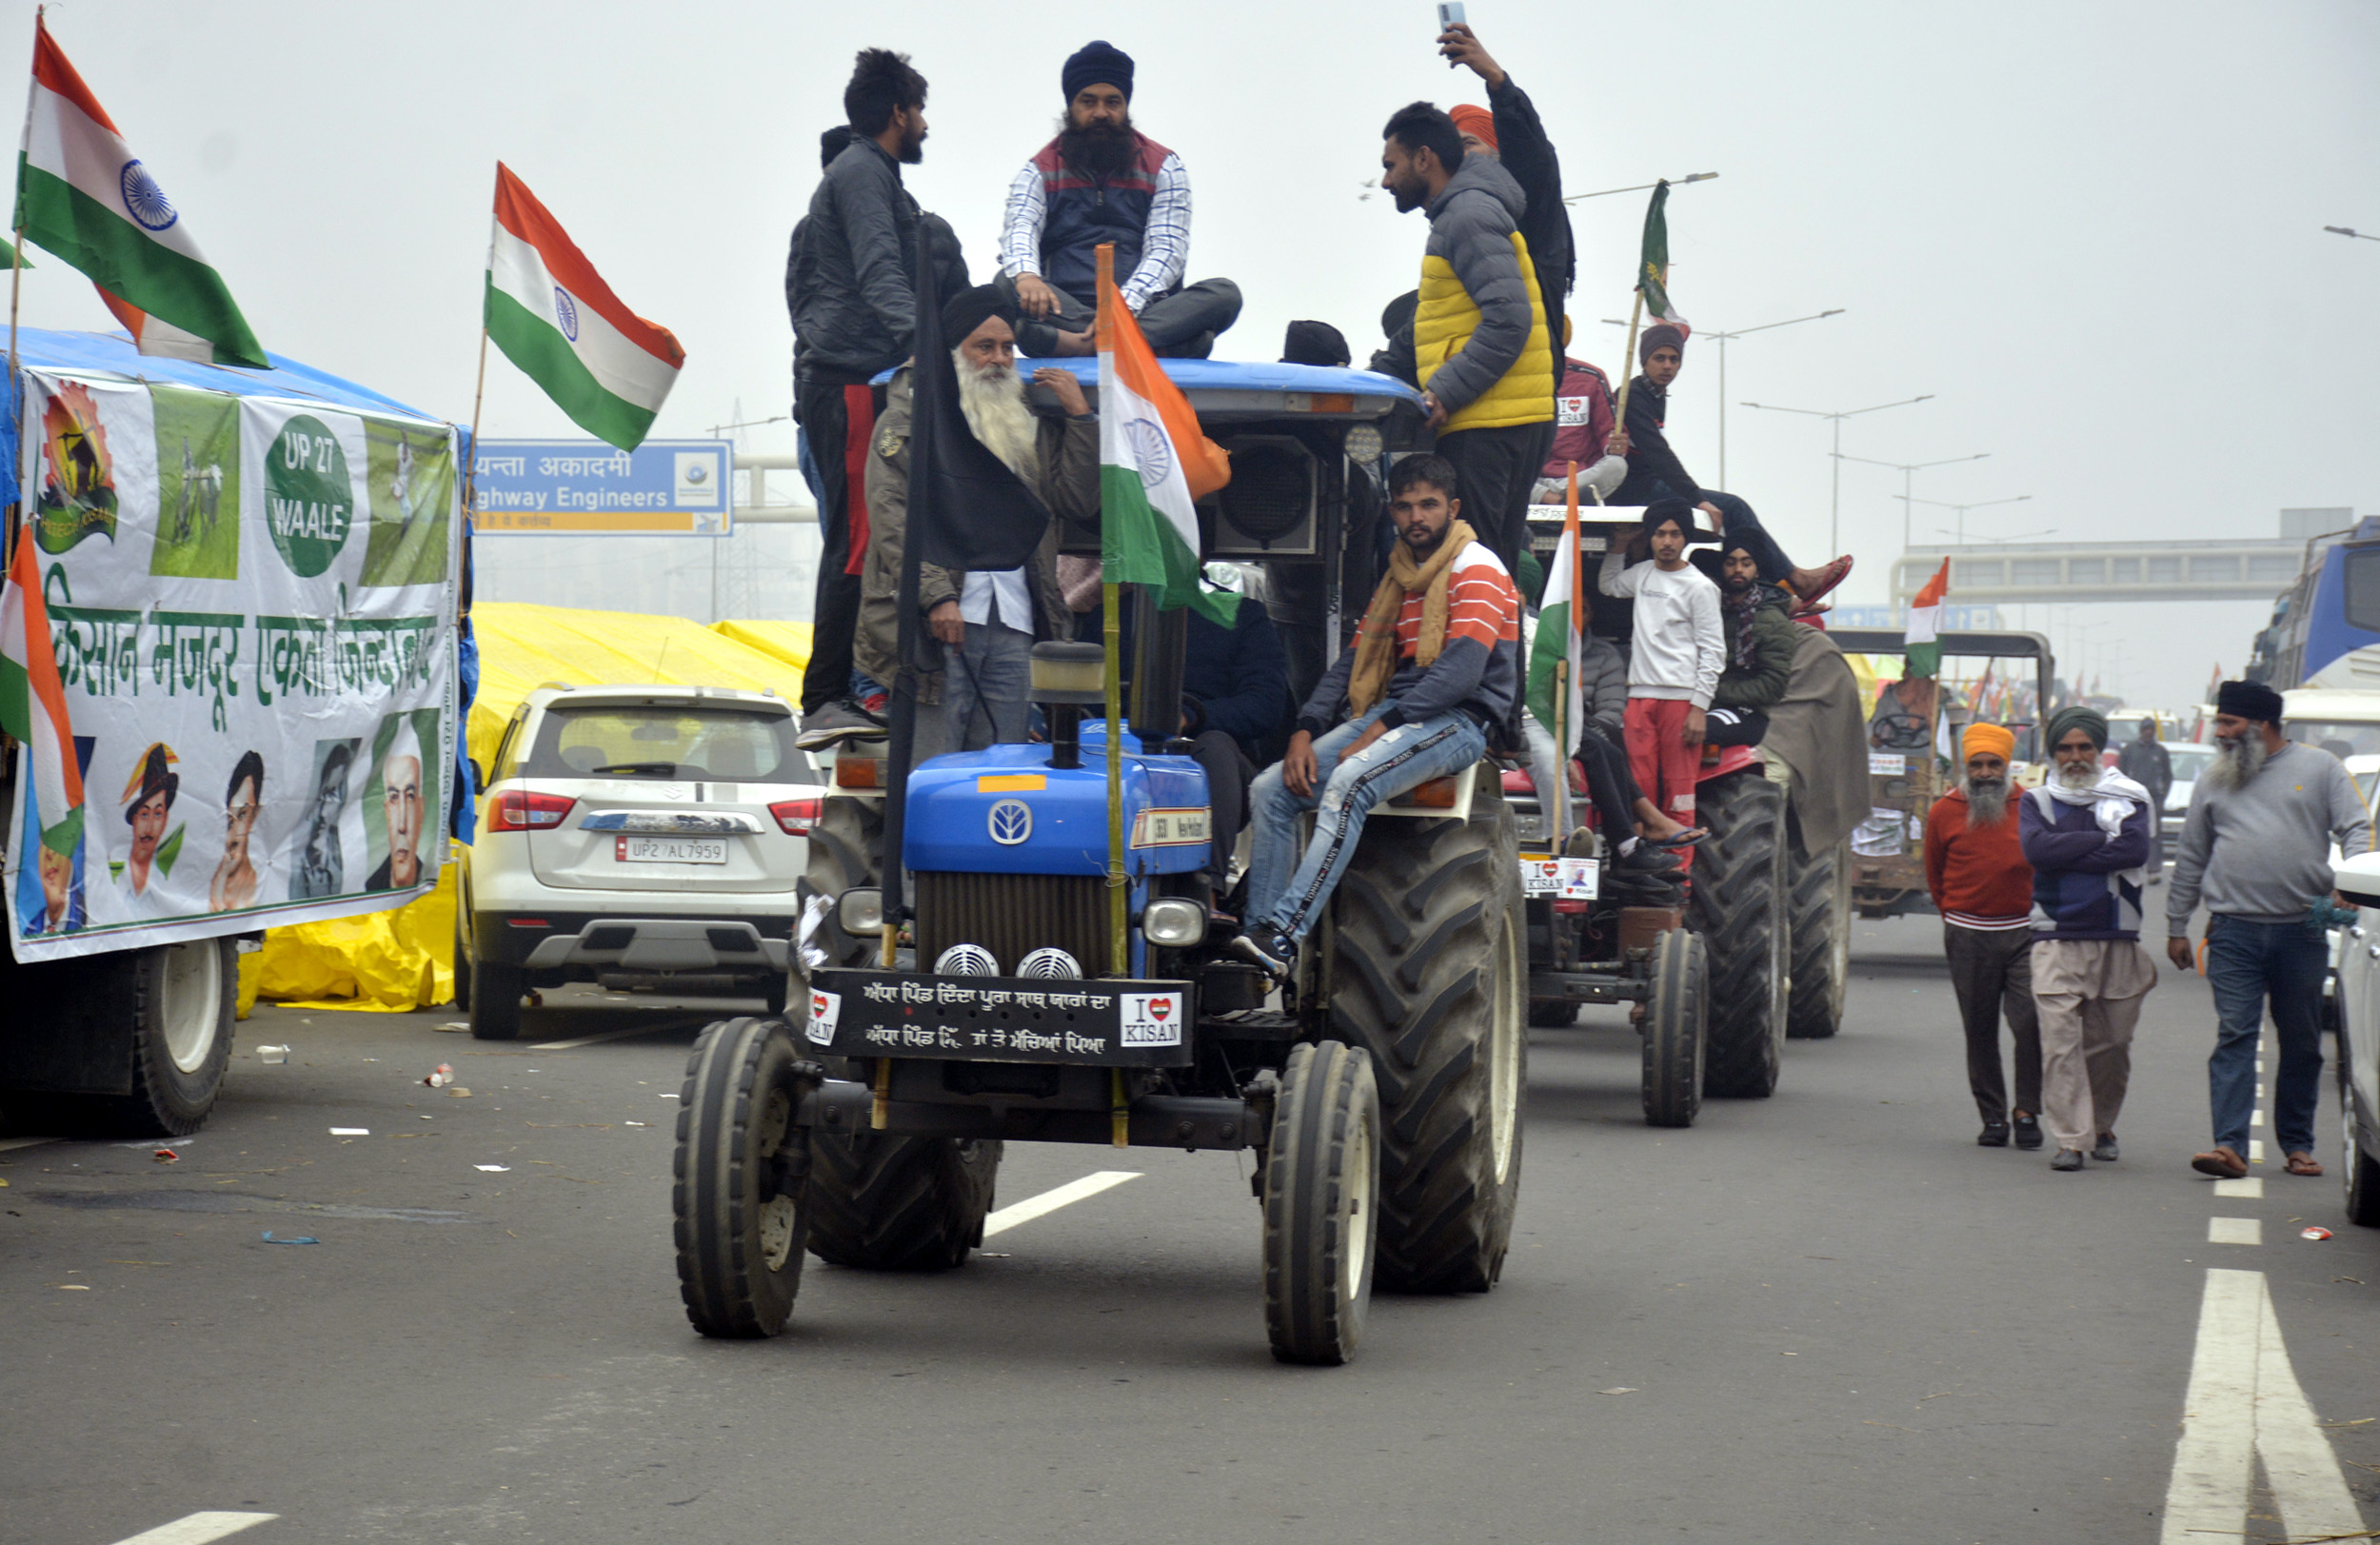 Traffic mayhem in many parts of Delhi due to farmers’ tractor parade